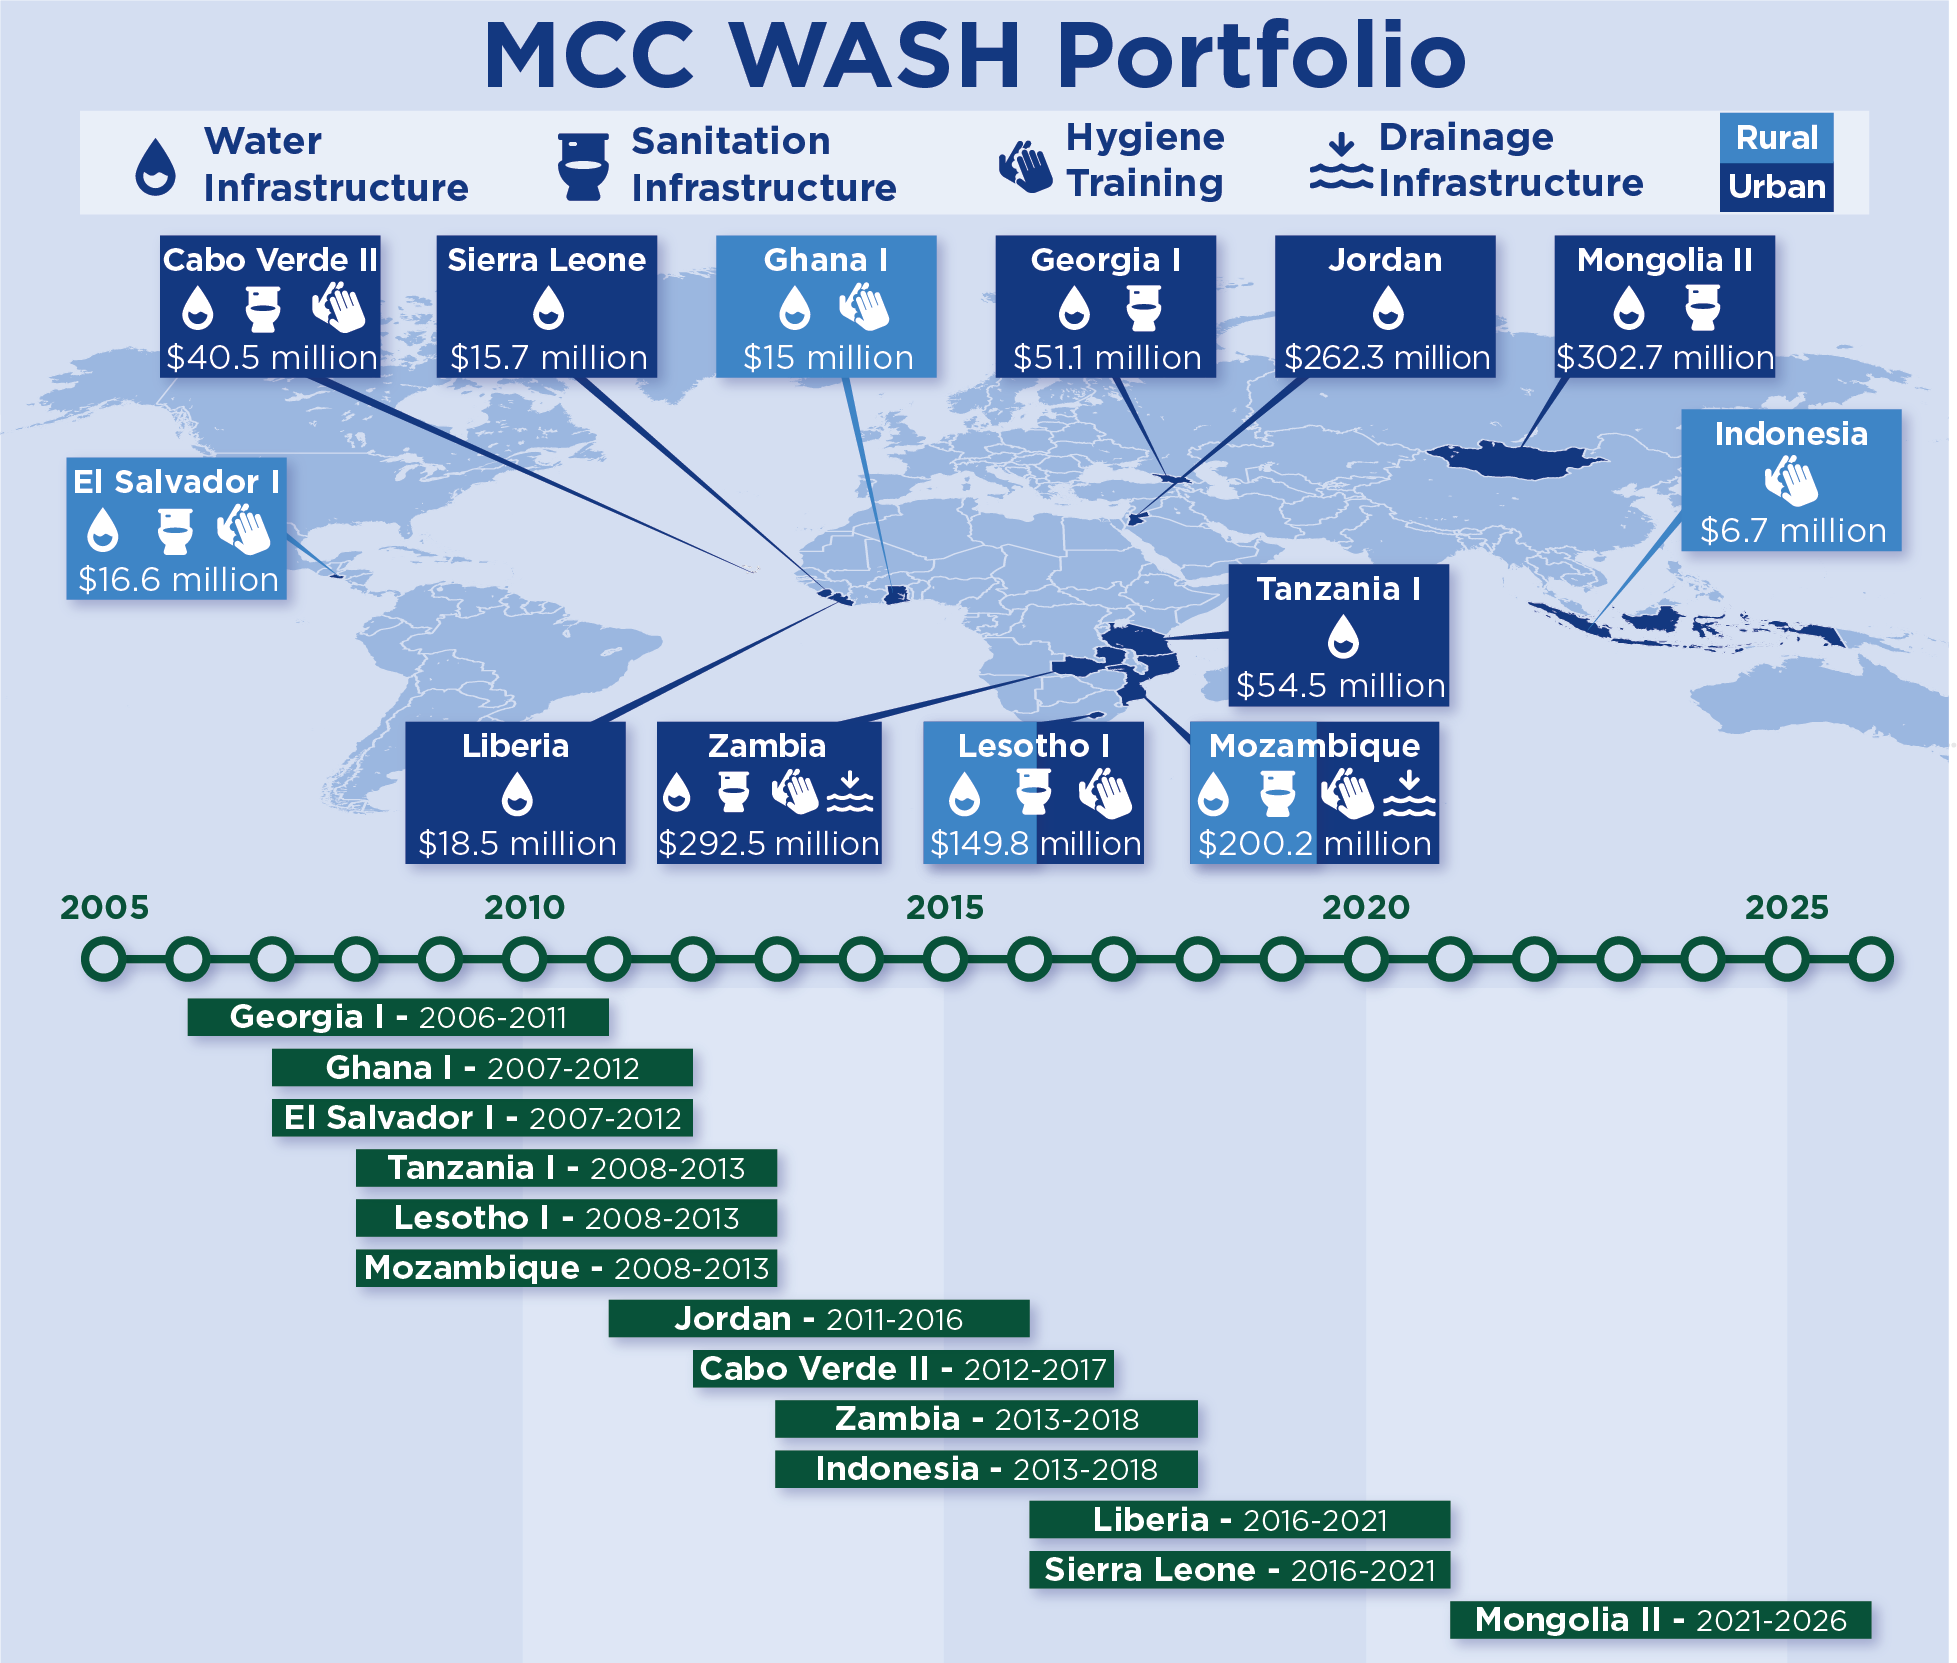 Timeline of MCC's rural and urban WASH portfolio with dollar amounts